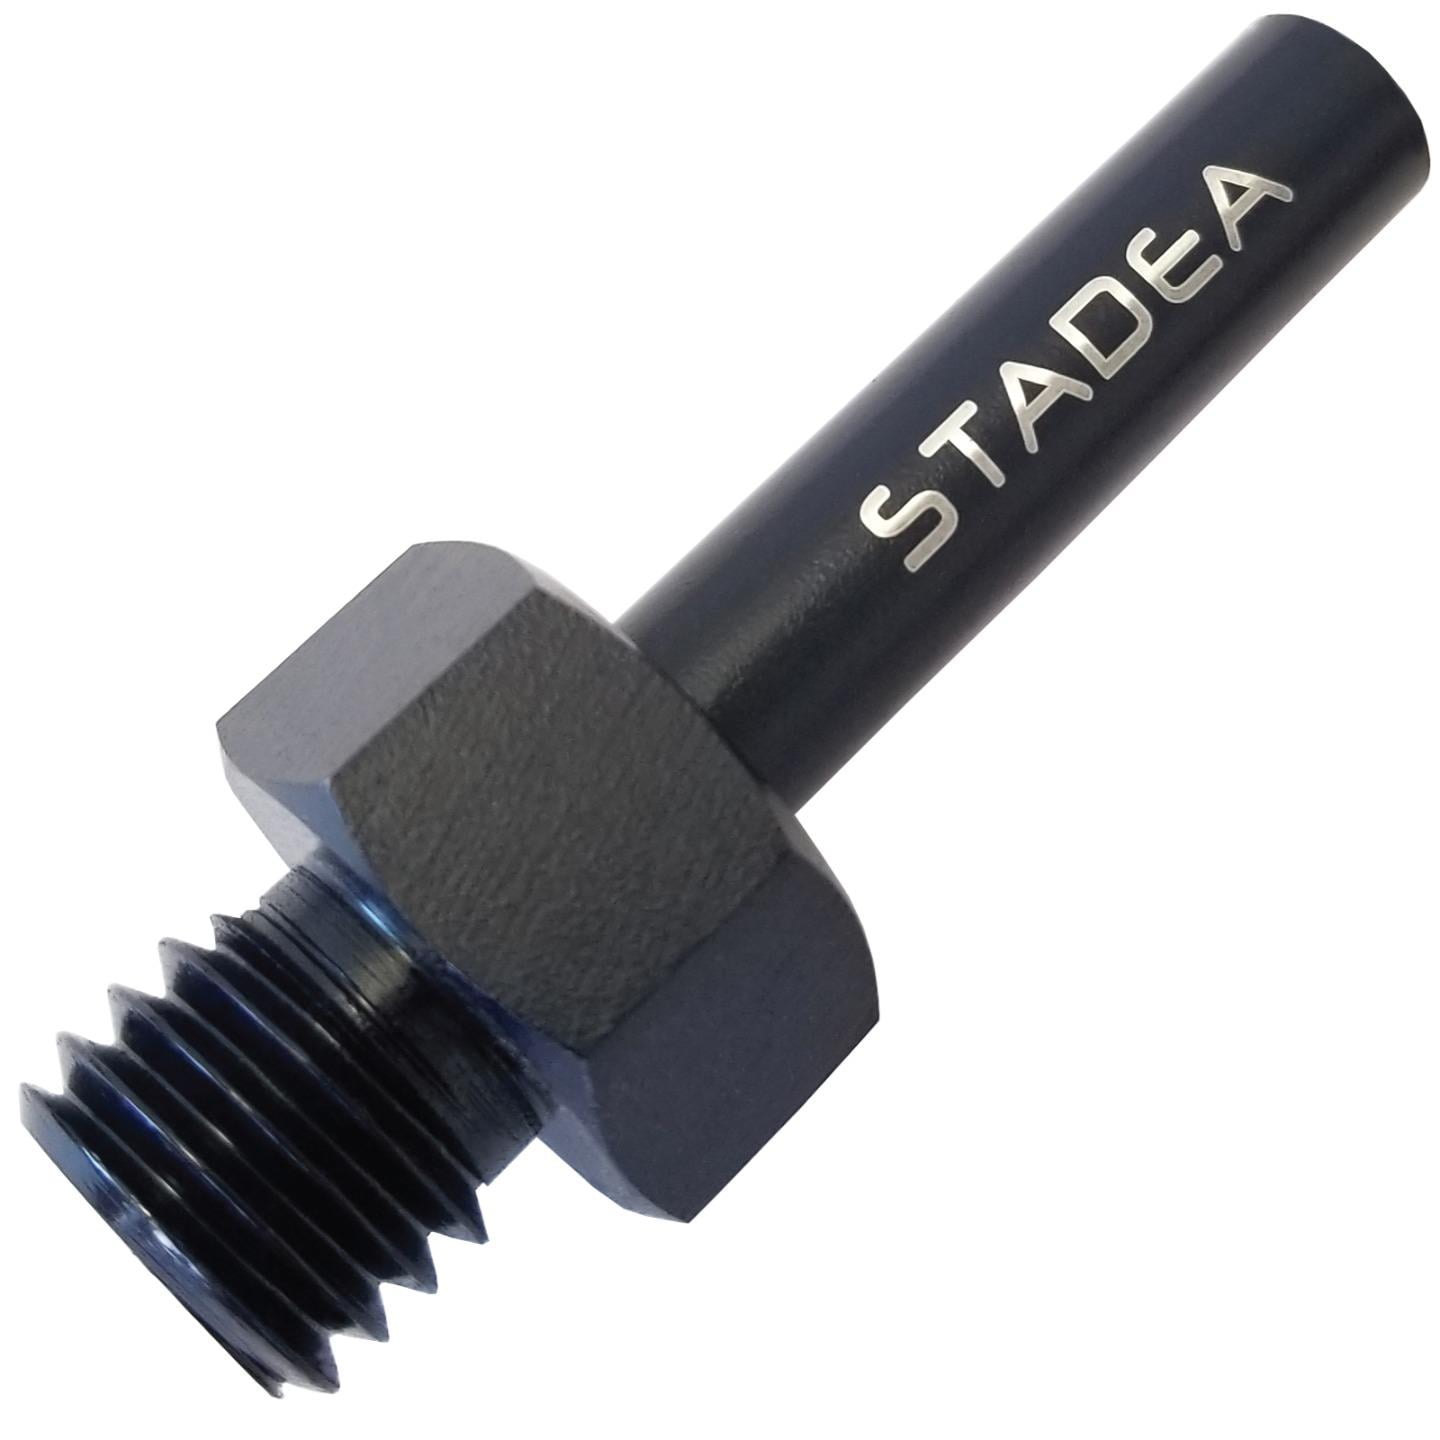 Diamond Core Drill Bit Adapter 5/8-11 Male thread  3/8 Four sided shaft 